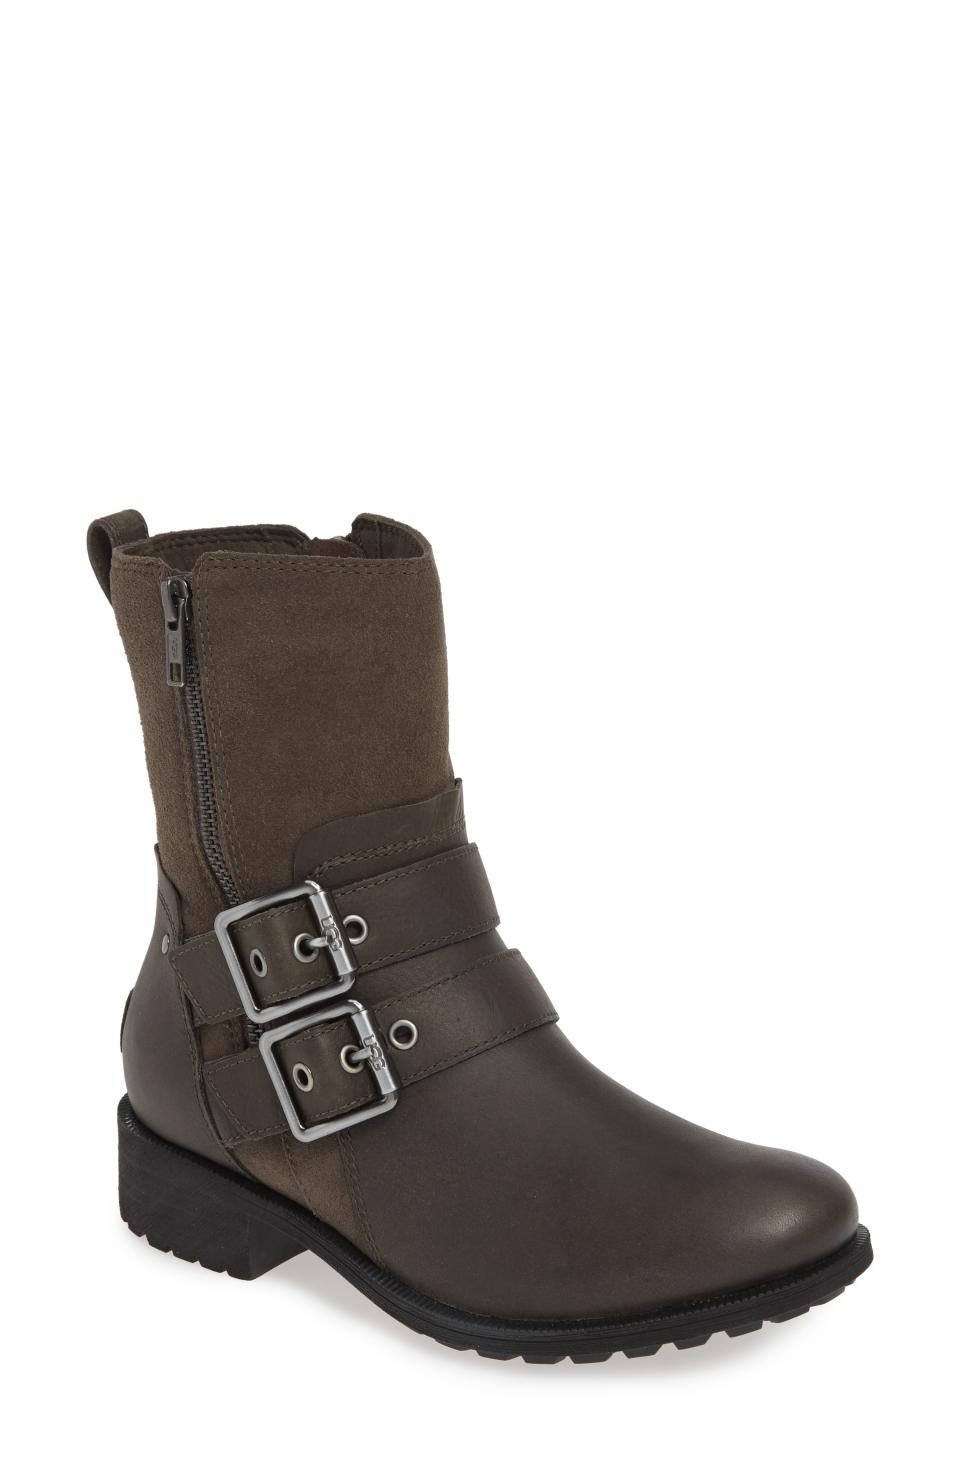 8) Wilde Waterproof Leather Boot